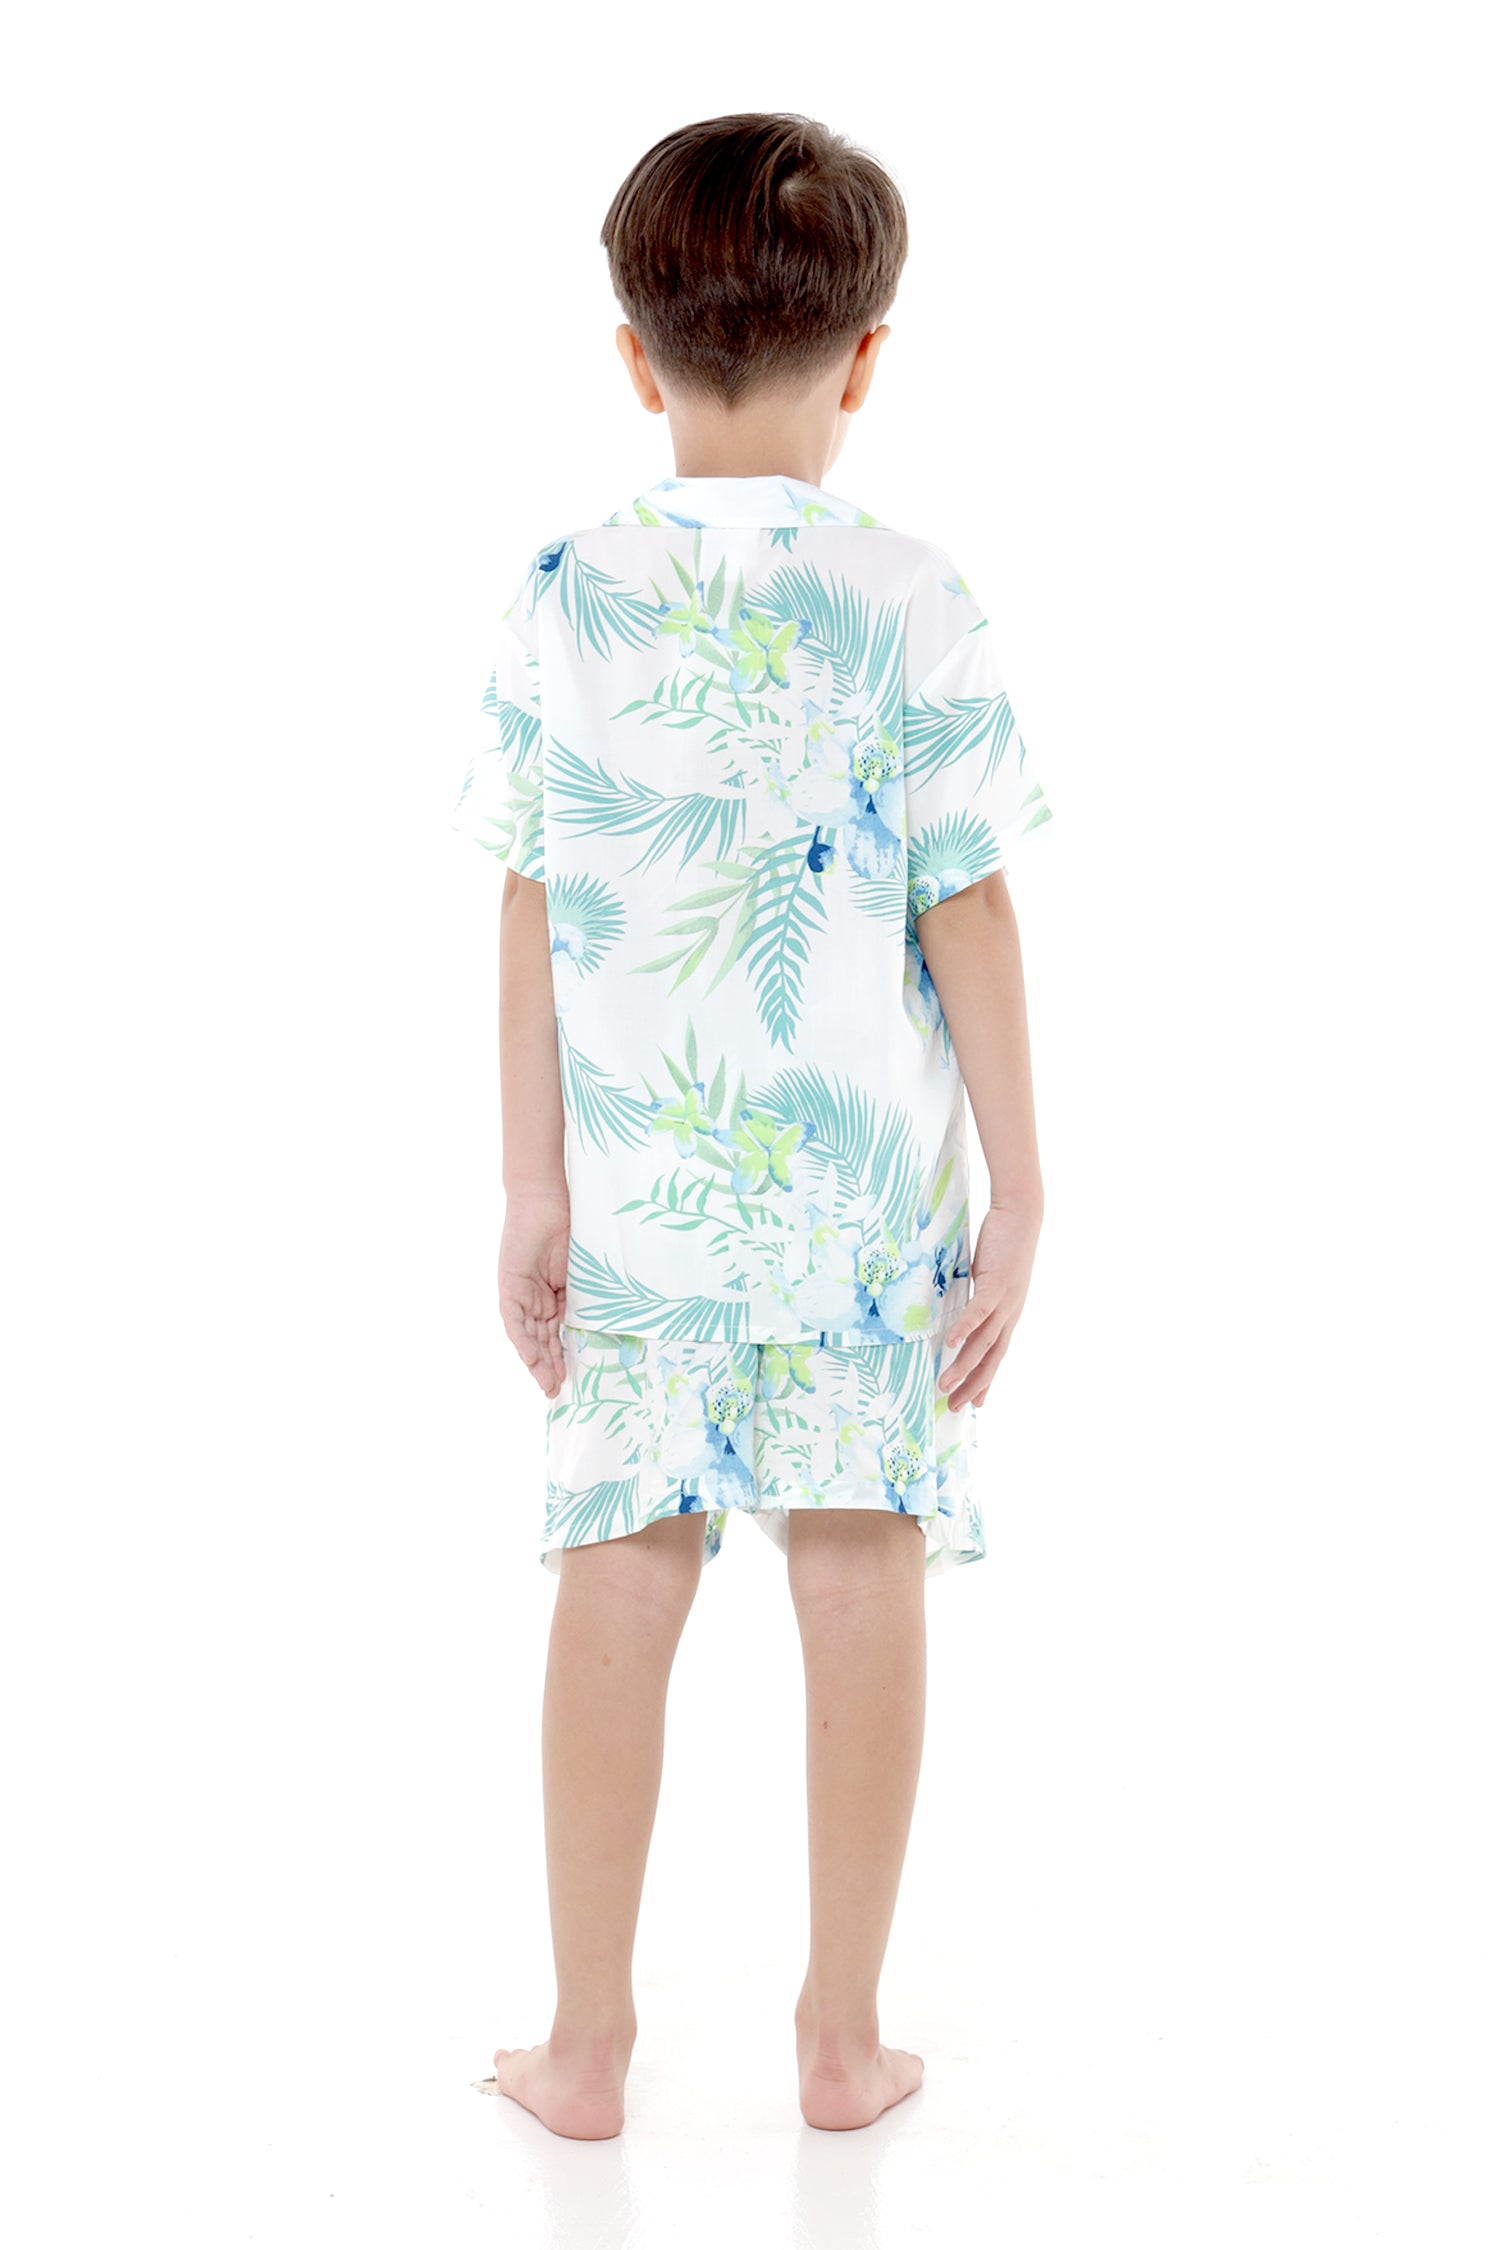 Boy Aloha Shirt Cabana Set in Orchid Breeze White